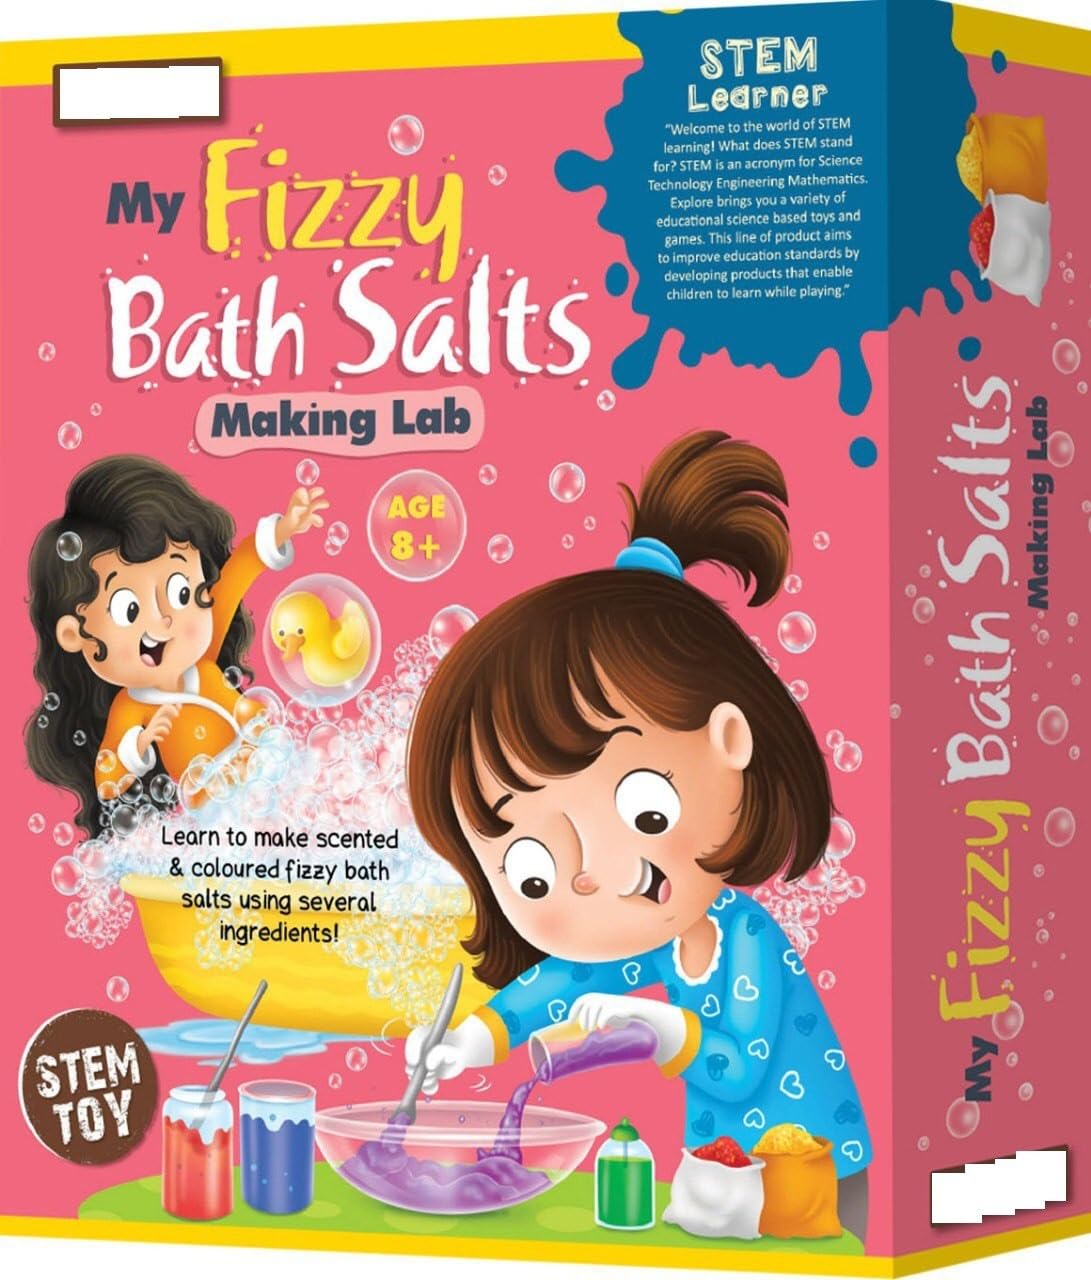 My Fizzy Bath Salts Making Lab Kit for Kids 8+ Educational DIY Kit